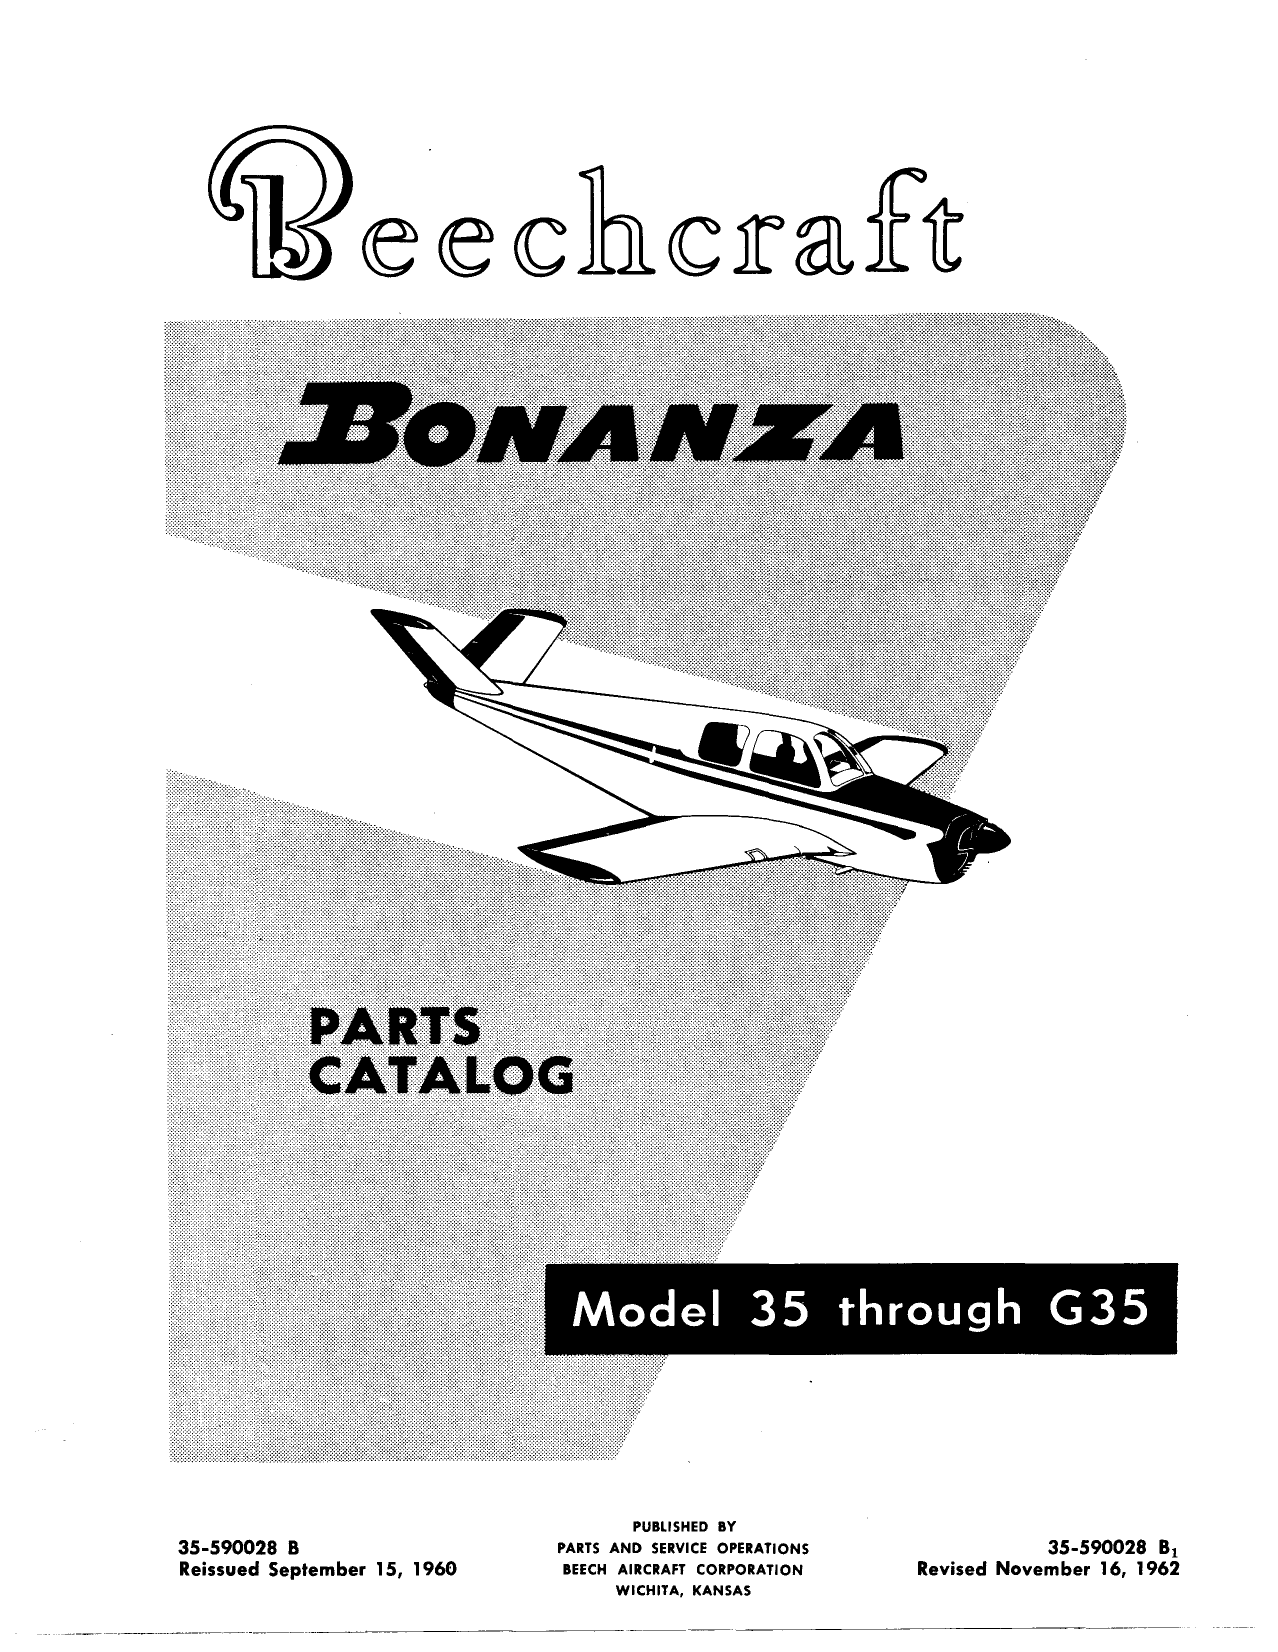 Beechcraft Bonanza 35 thru G35 IPC Parts Catalog Preview image 1